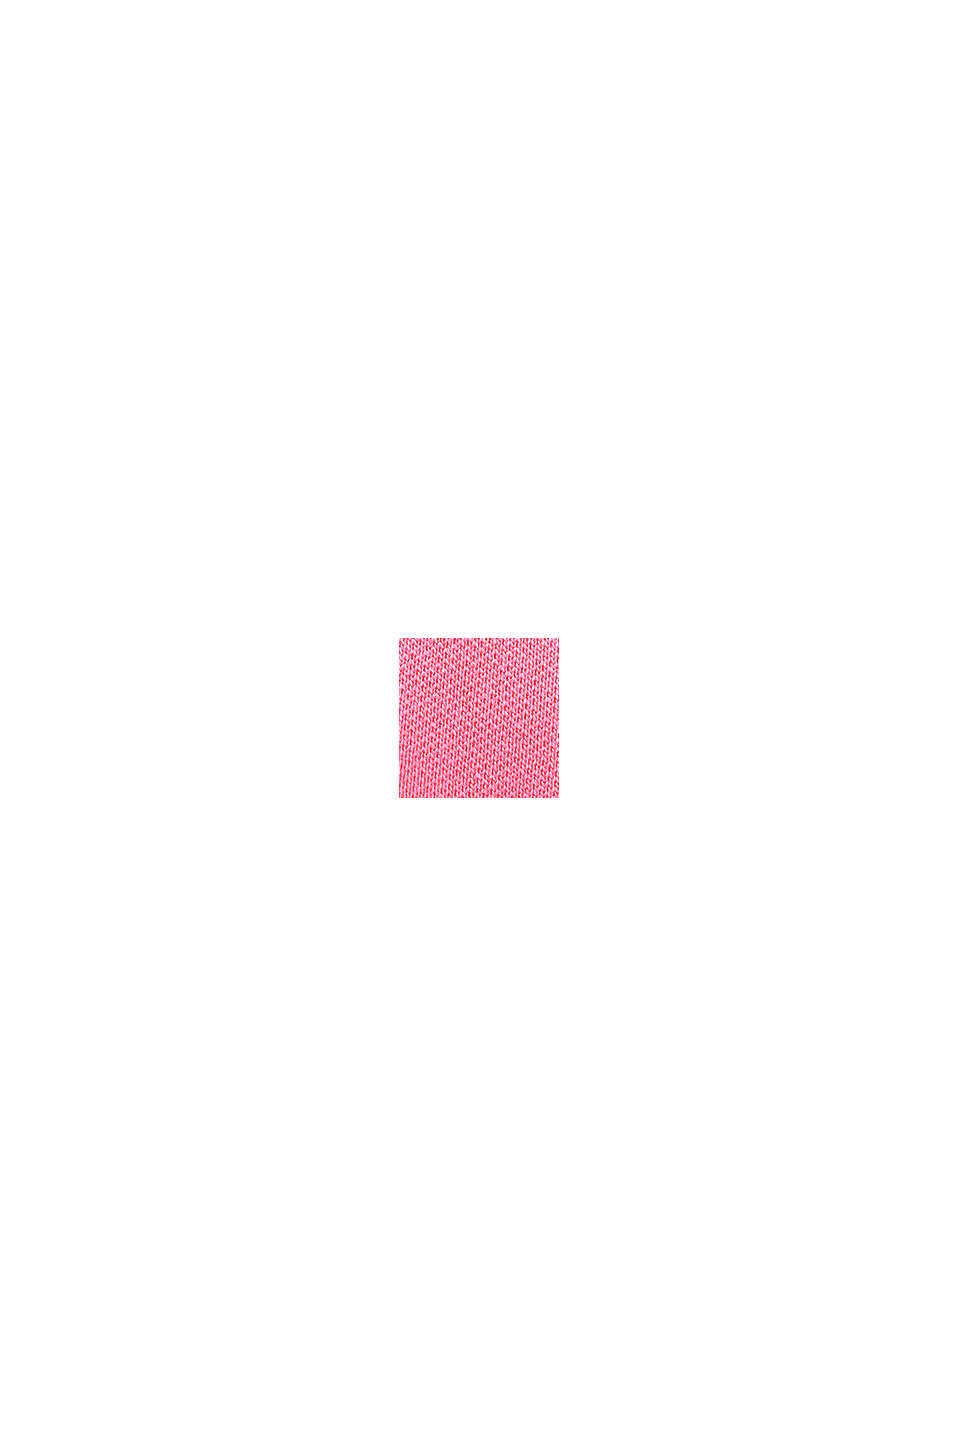 ESPRIT x Rest & Recreation Capsule 針織背心, 粉紅色, swatch